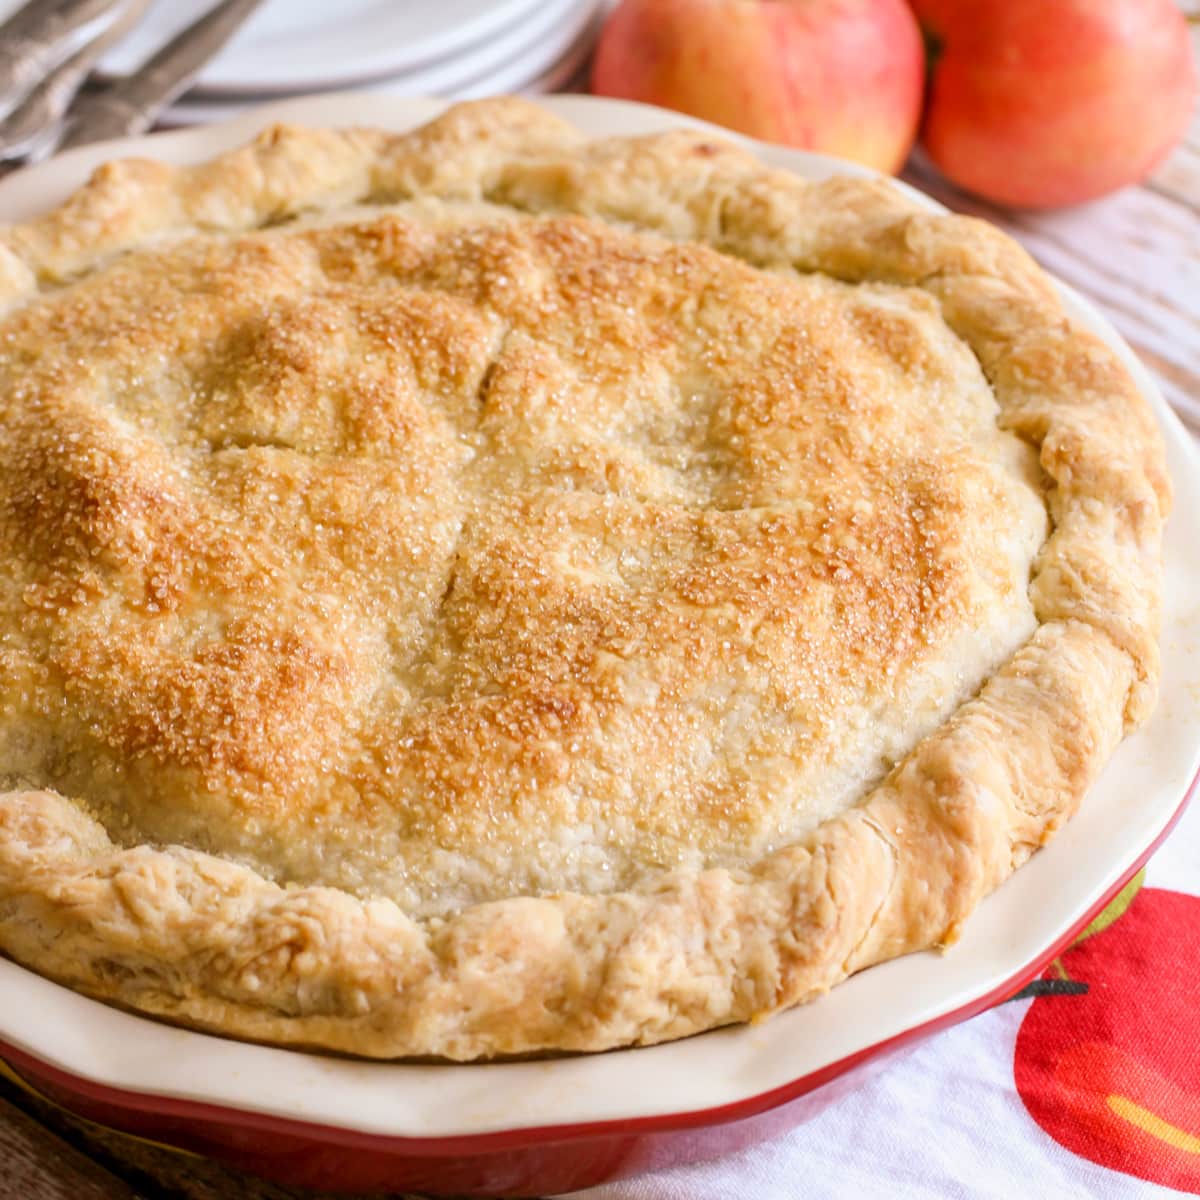 The best homemade apple pie recipe close up image.